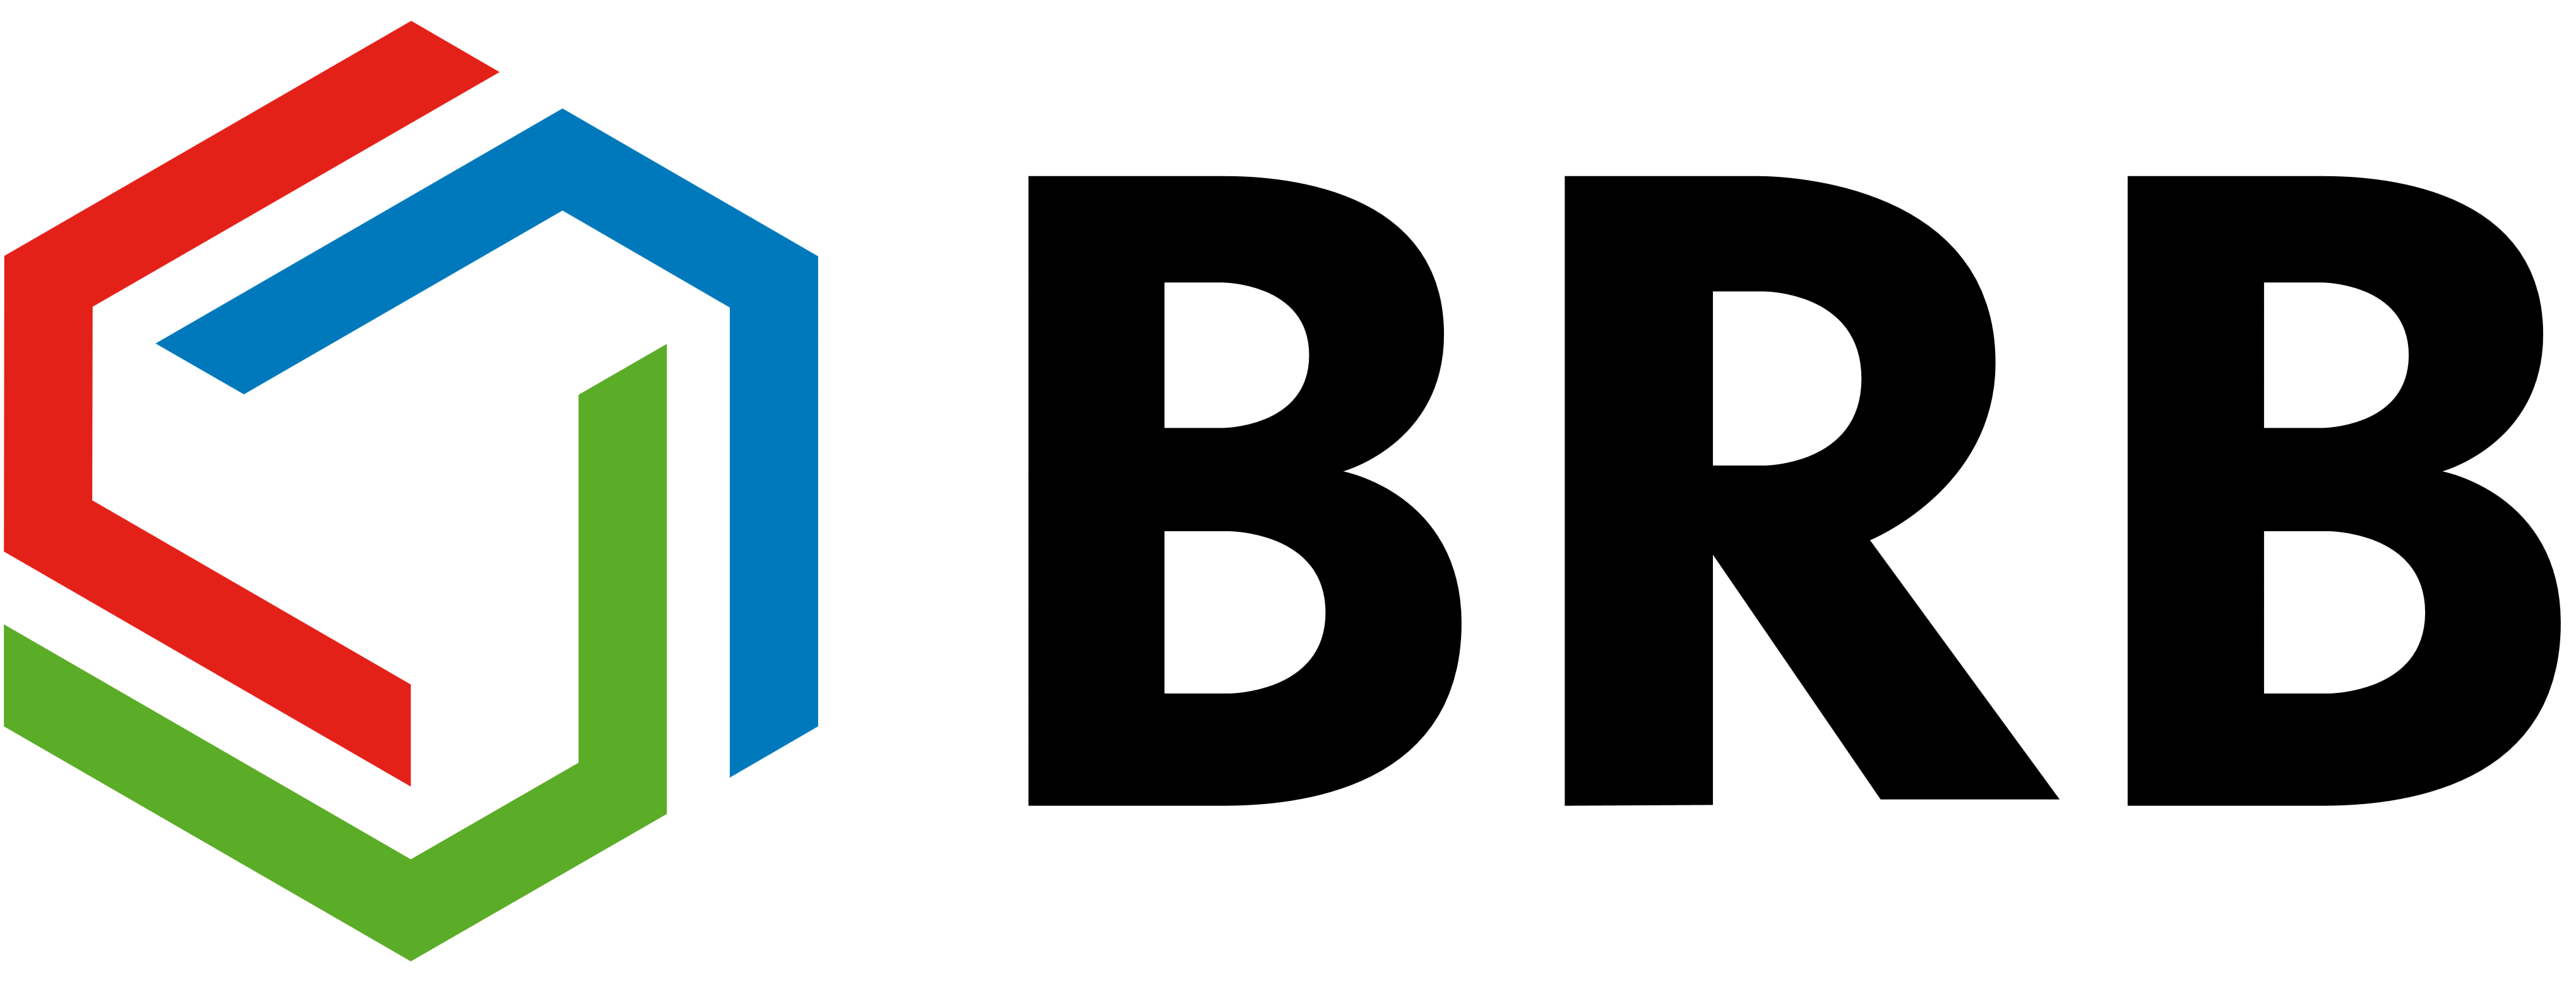 BRB Logo - BRB